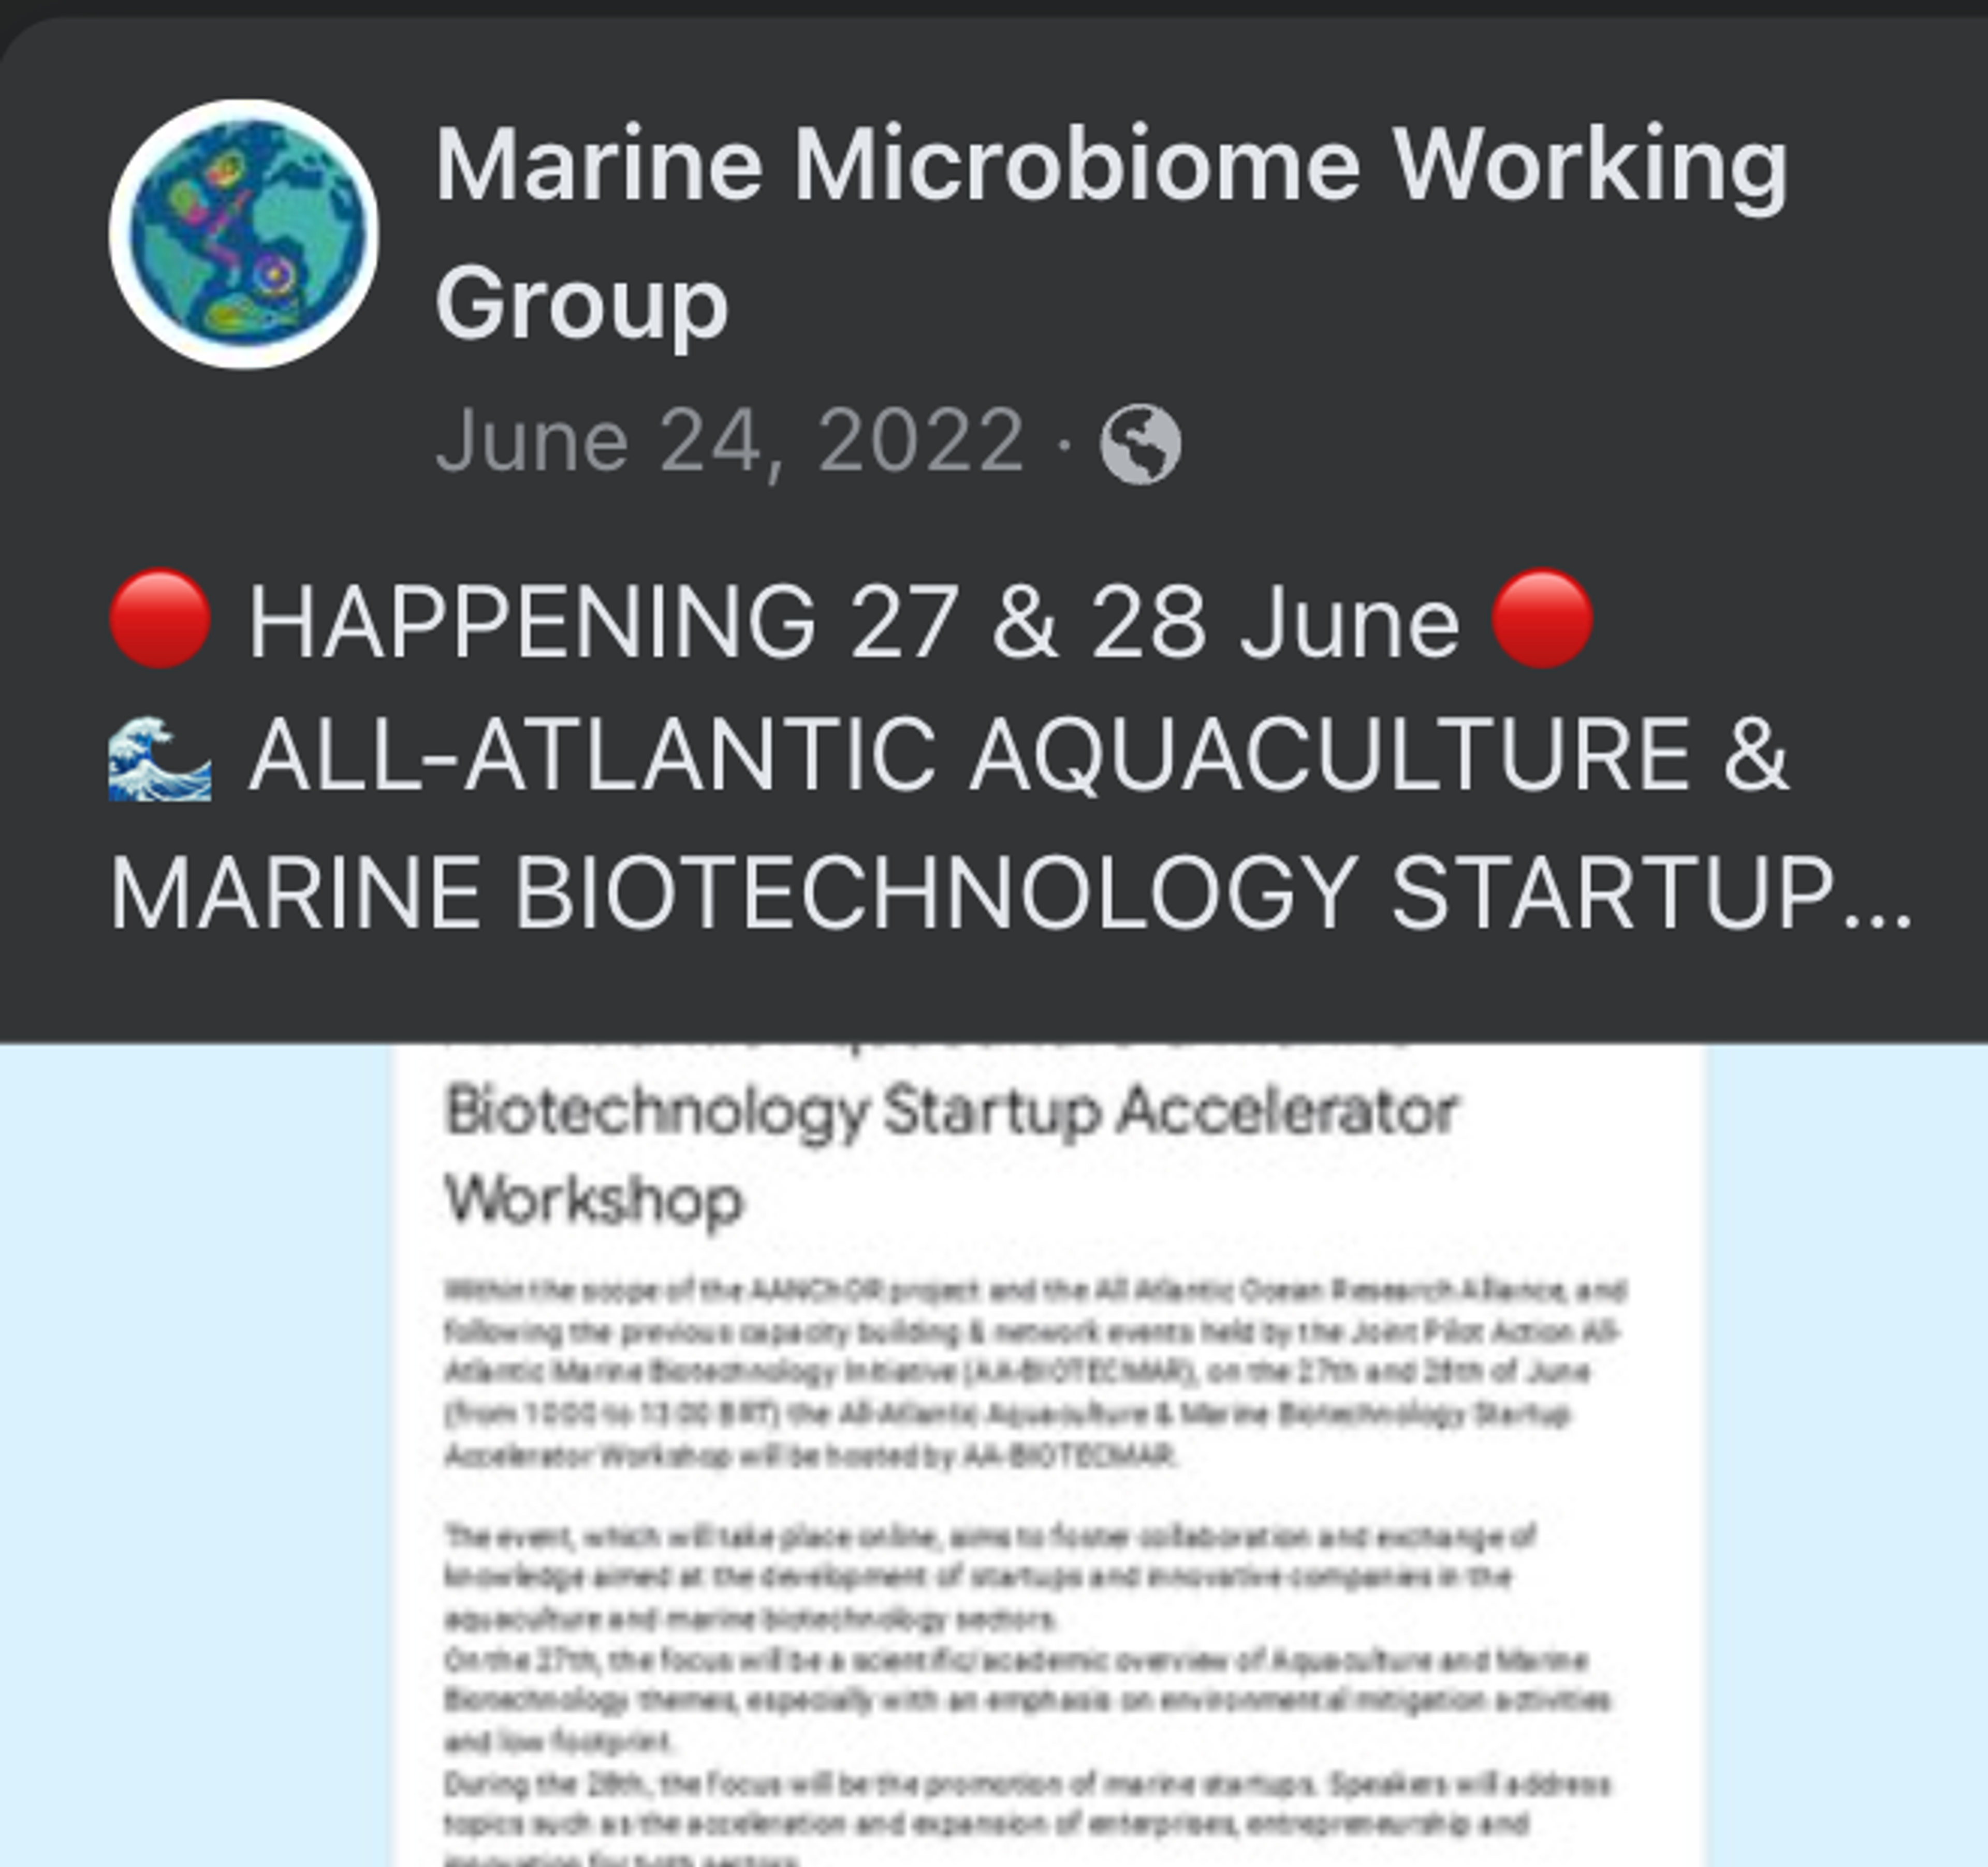 All-Atlantic Aquaculture & Marine Biotechnology Startup Accelerator Workshop